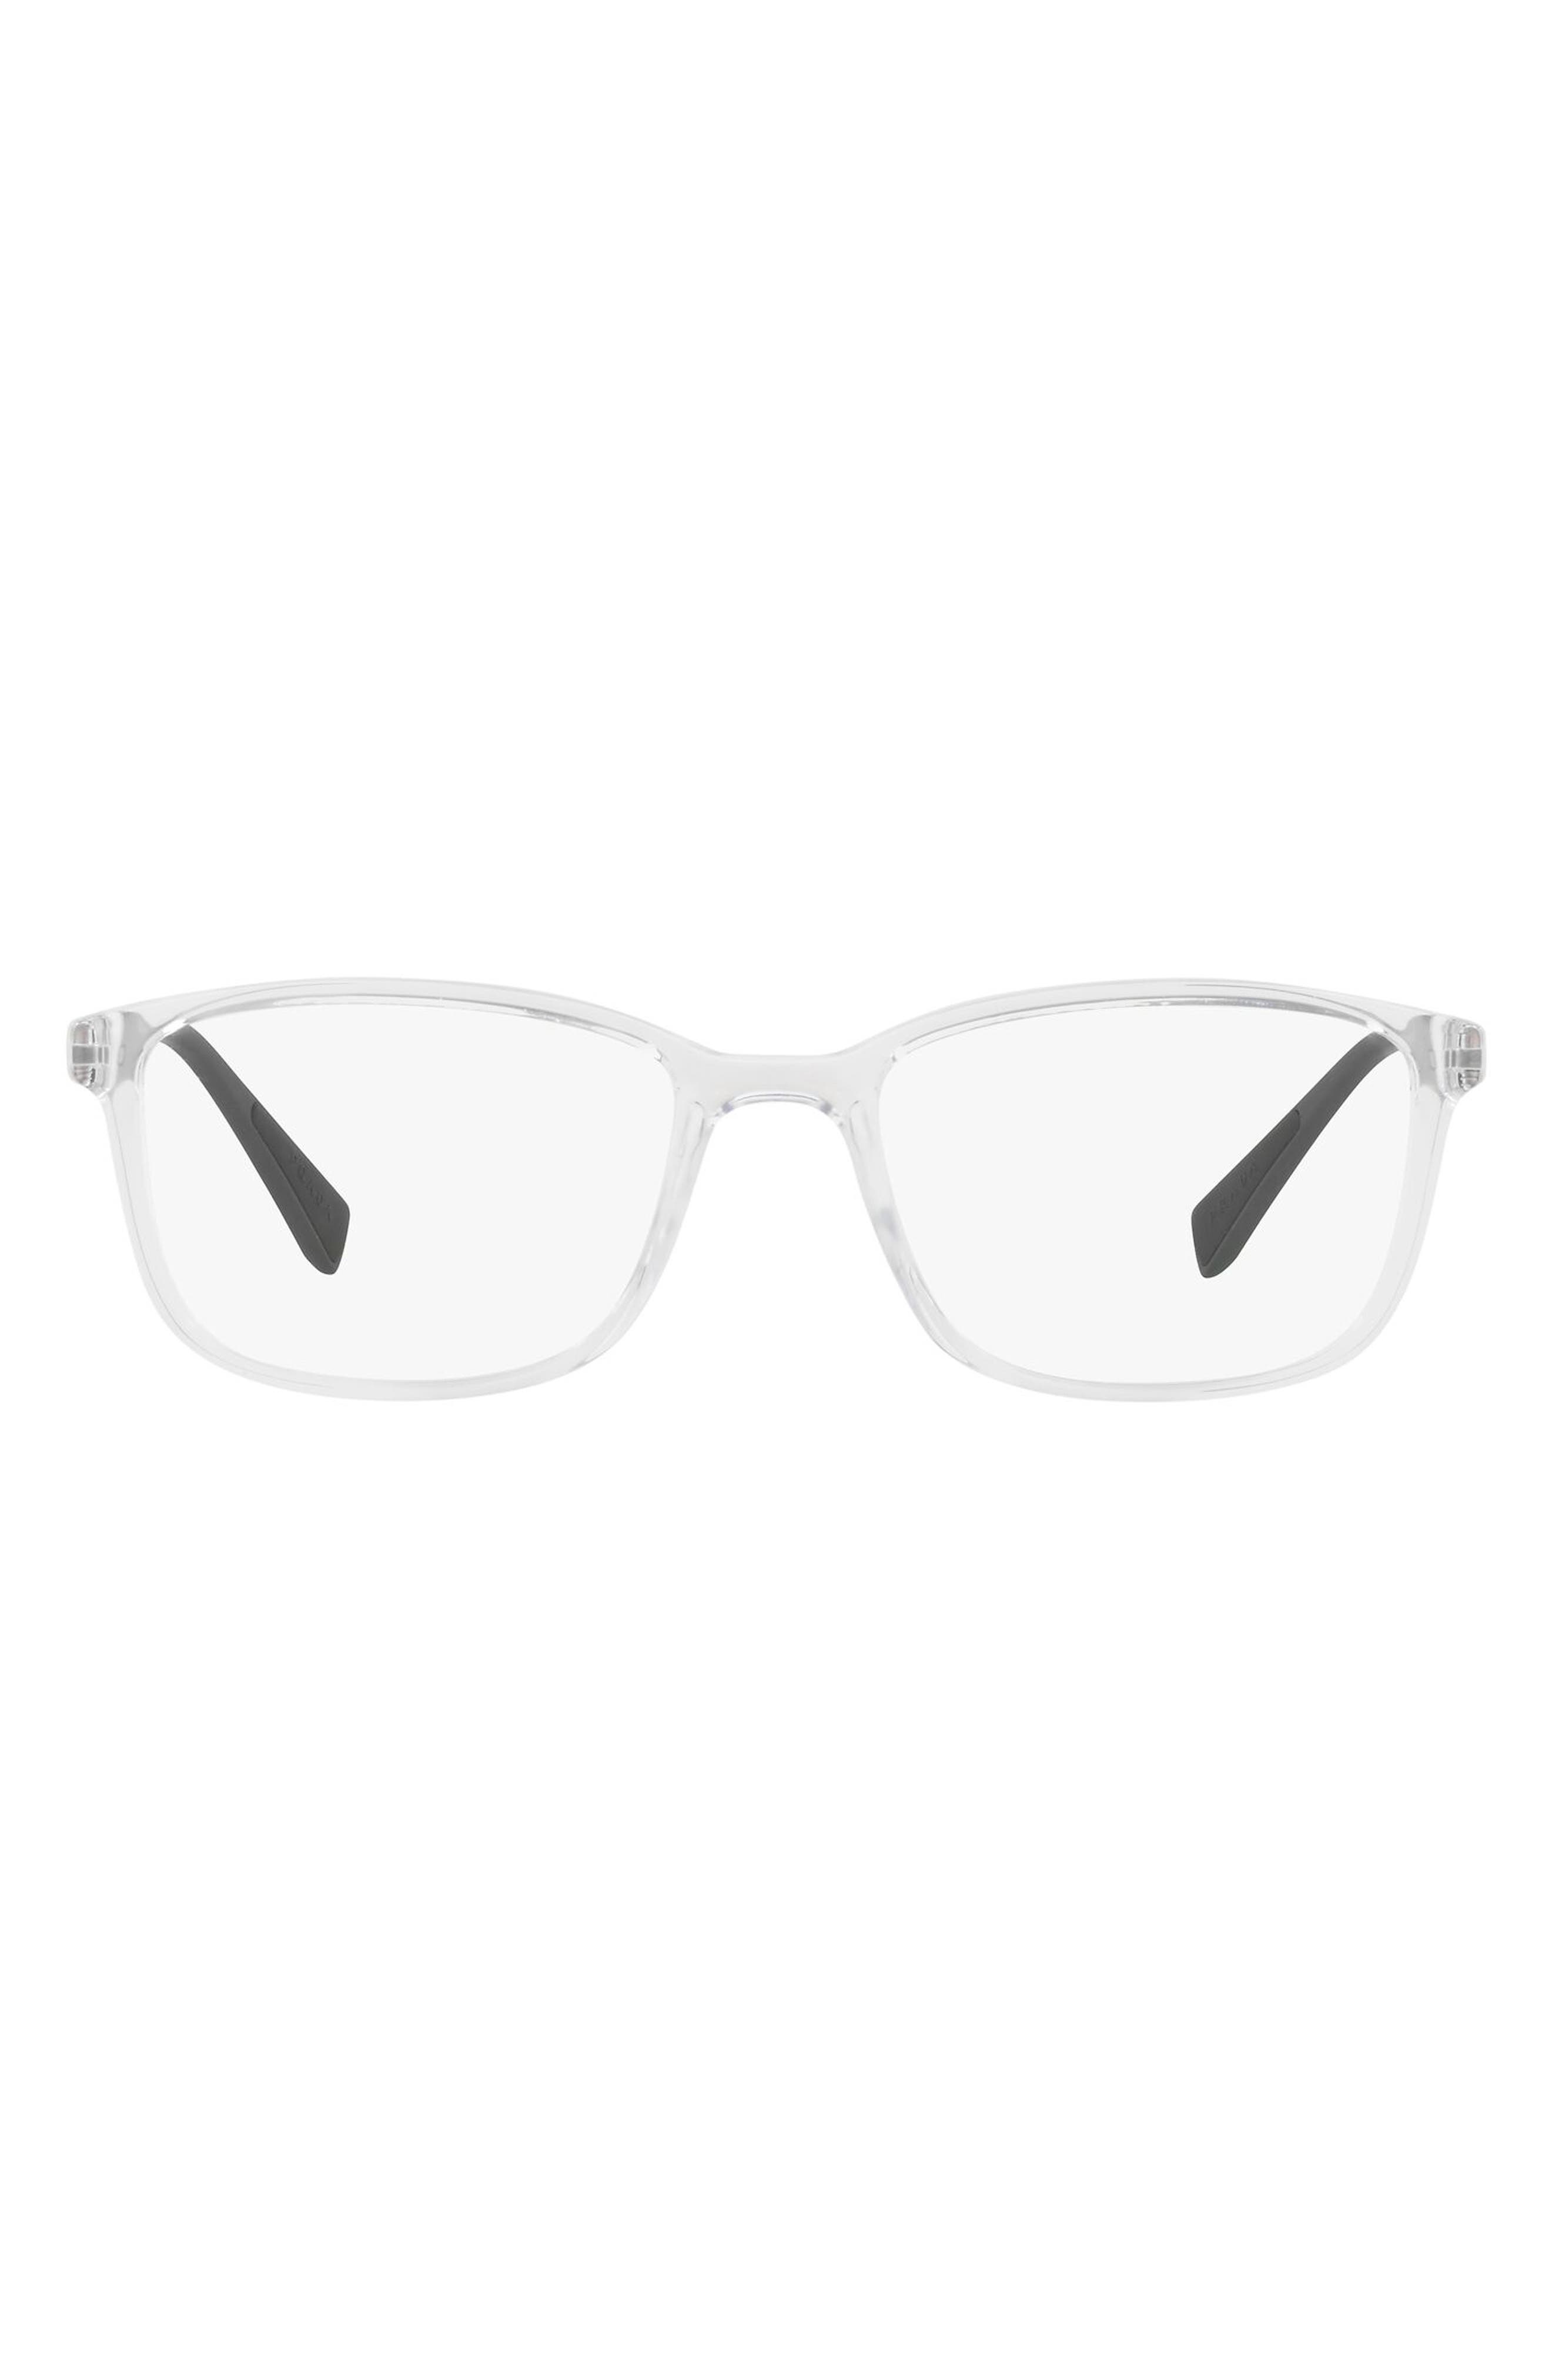 Prada 55mm Rectangular Optical Glasses in Transparent at Nordstrom